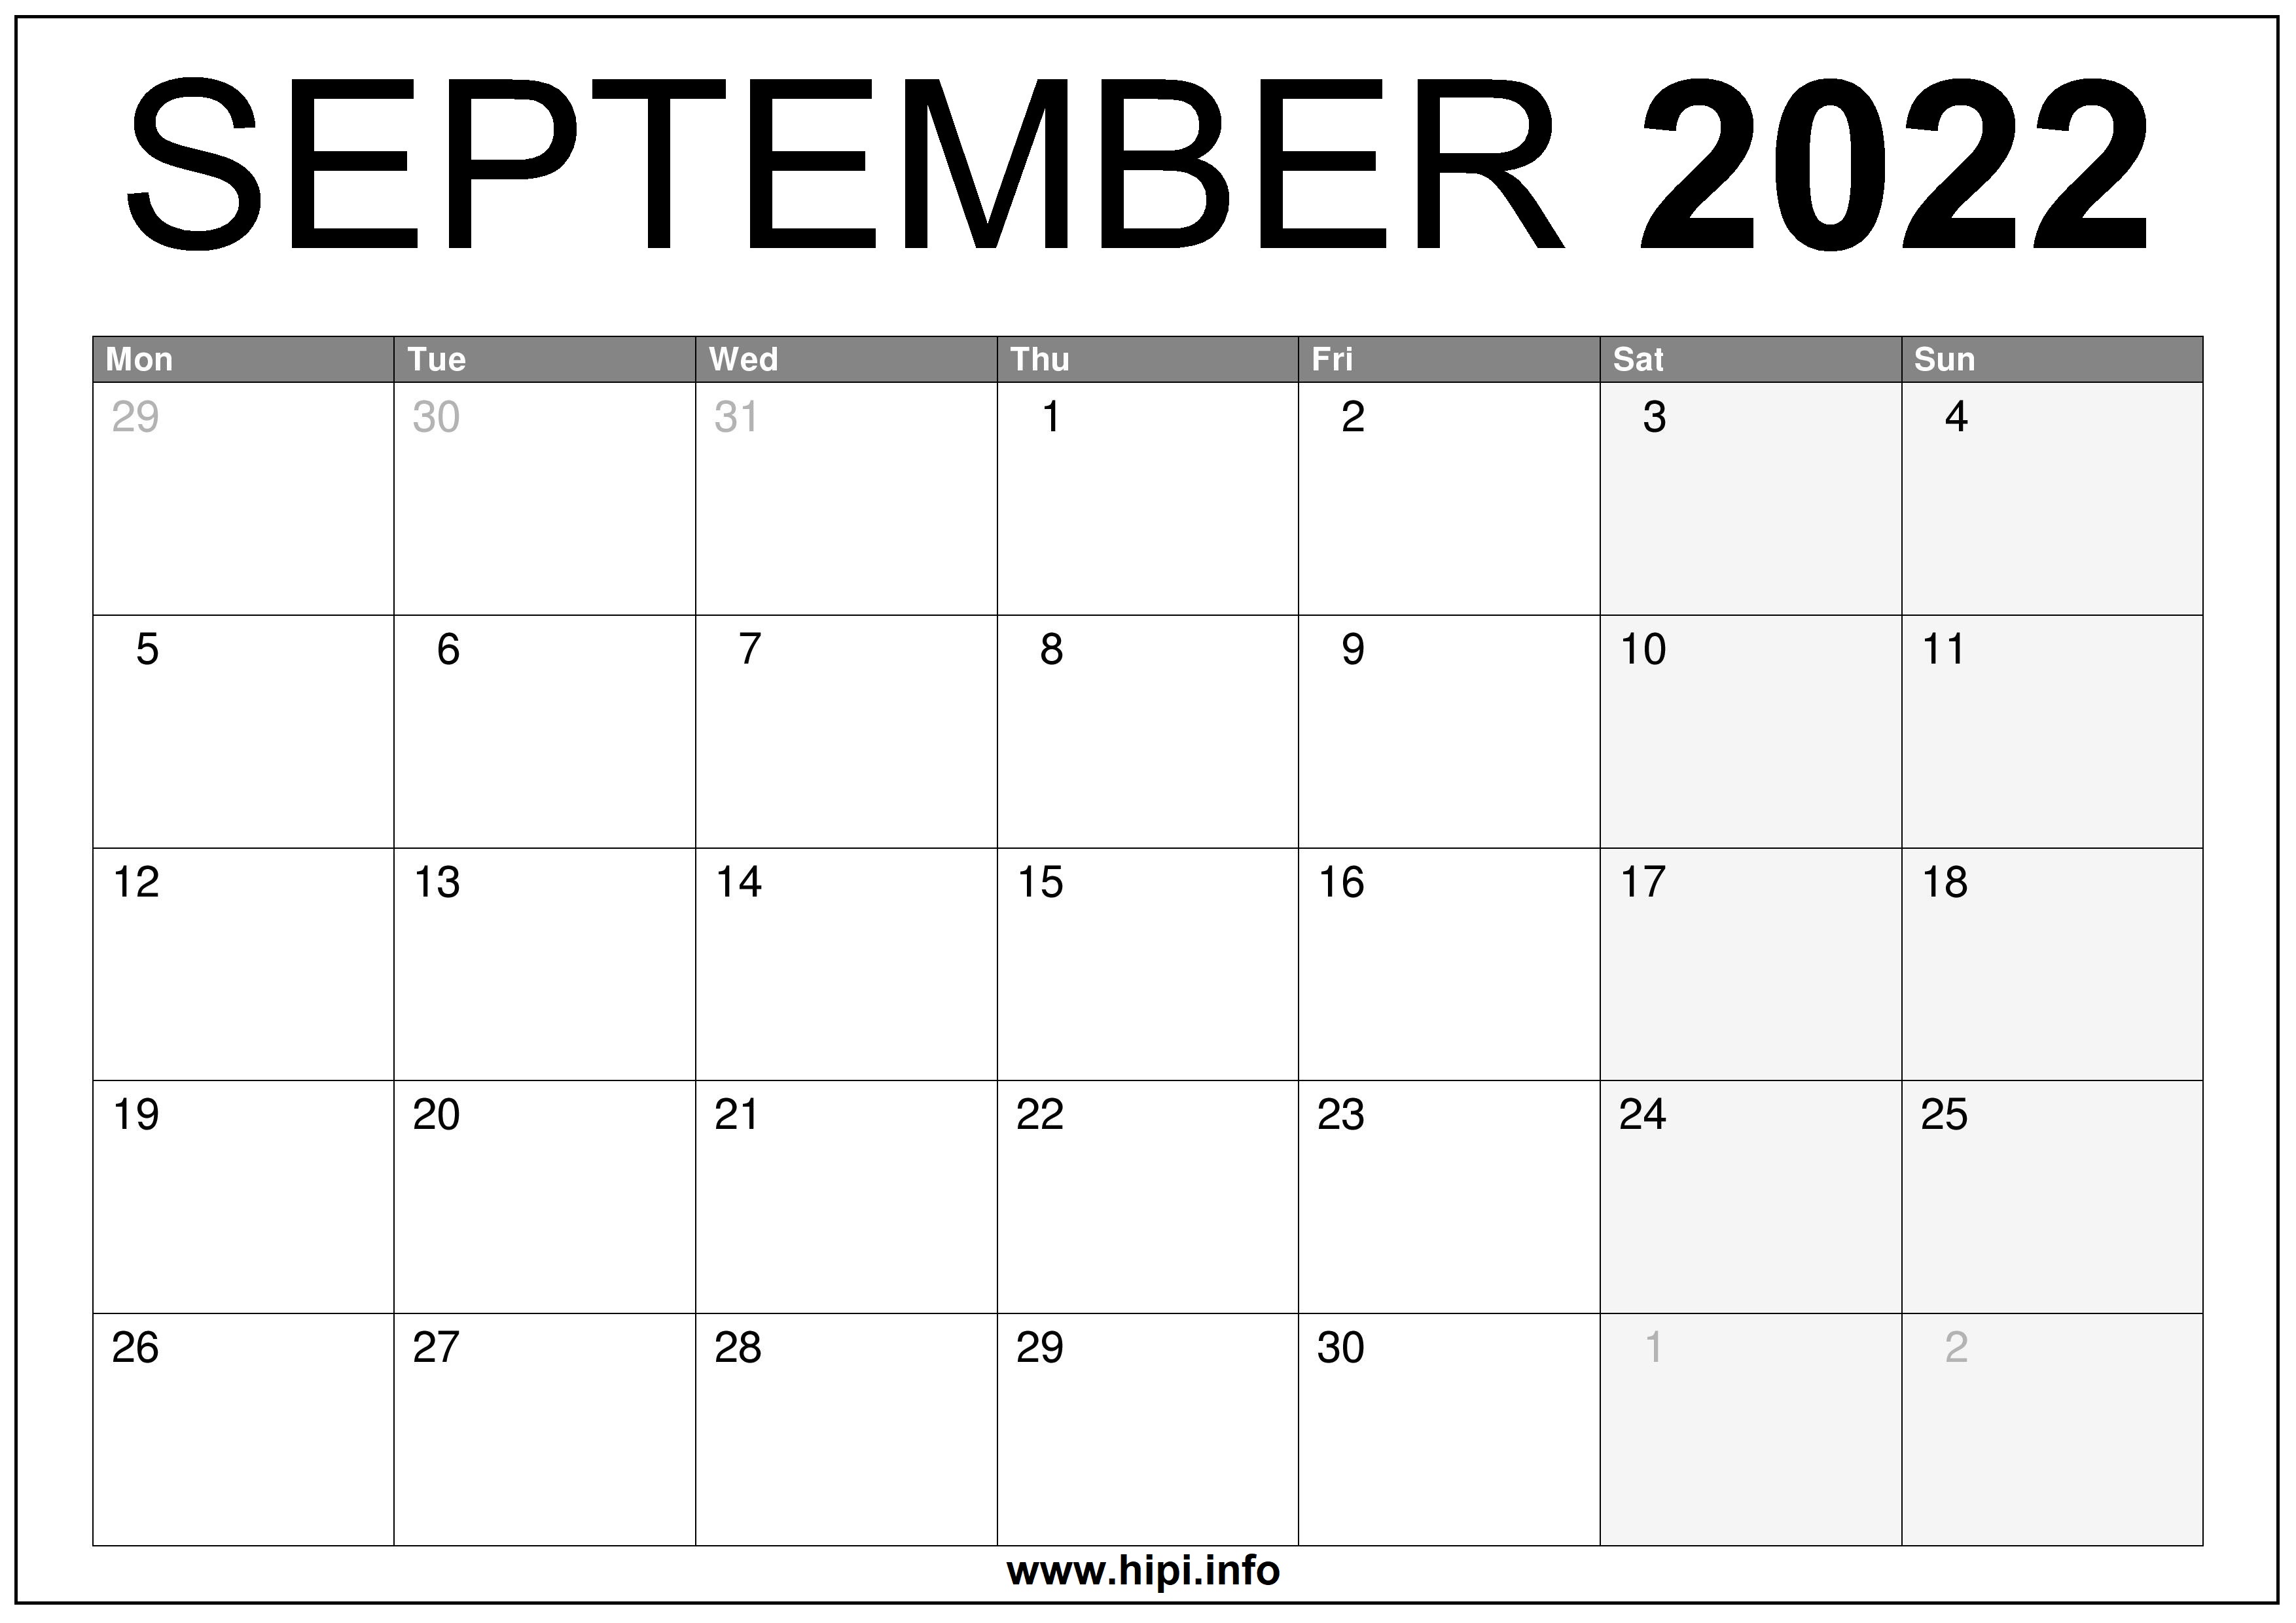 September 2022 Calendar Page September 2022 Uk Calendar Printable Free - Hipi.info | Calendars Printable  Free